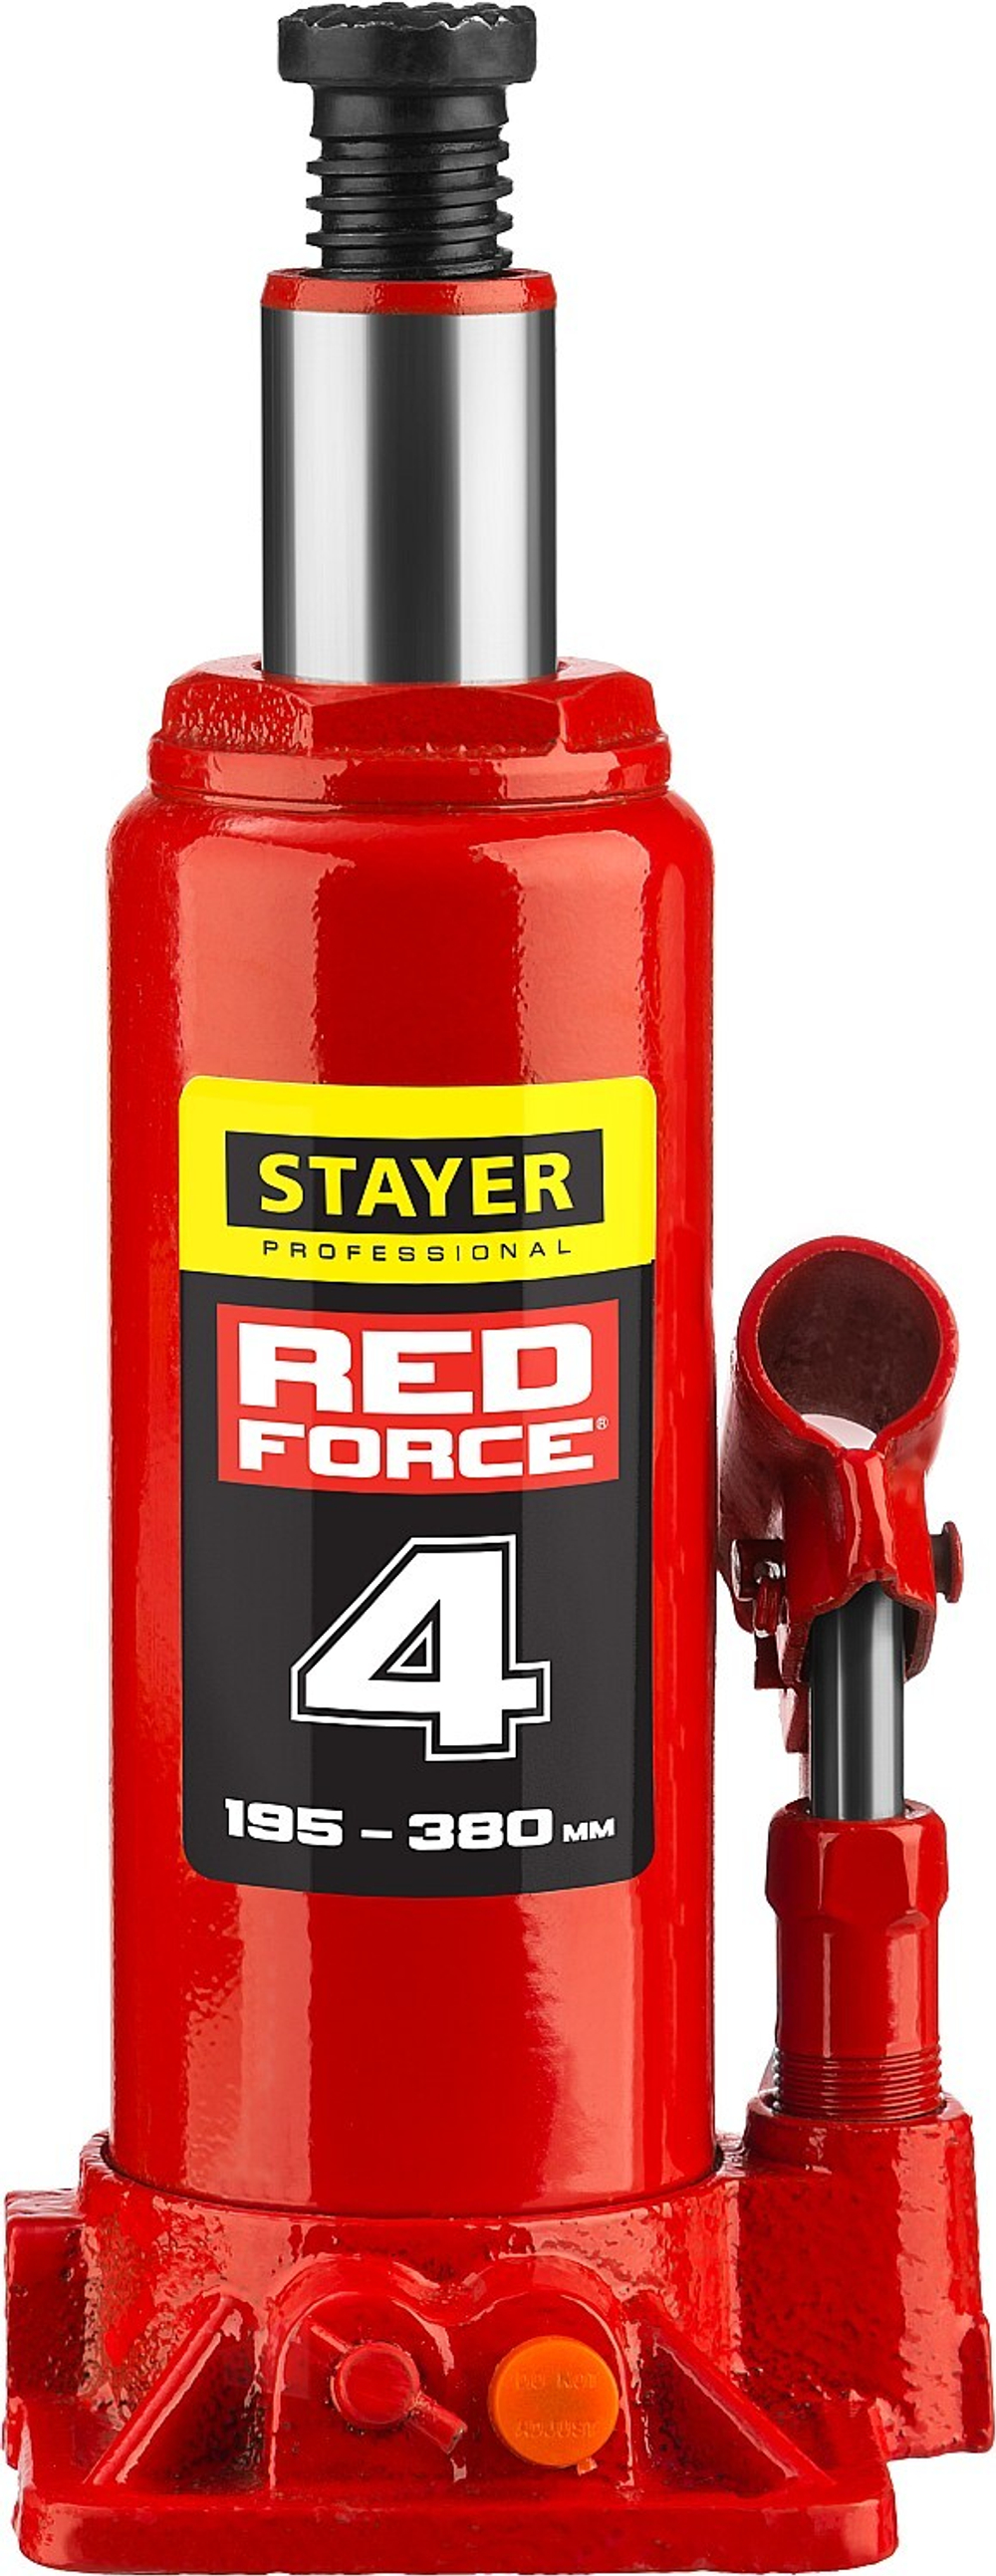 STAYER RED FORCE 4т 195-380мм домкрат бутылочный гидравлический